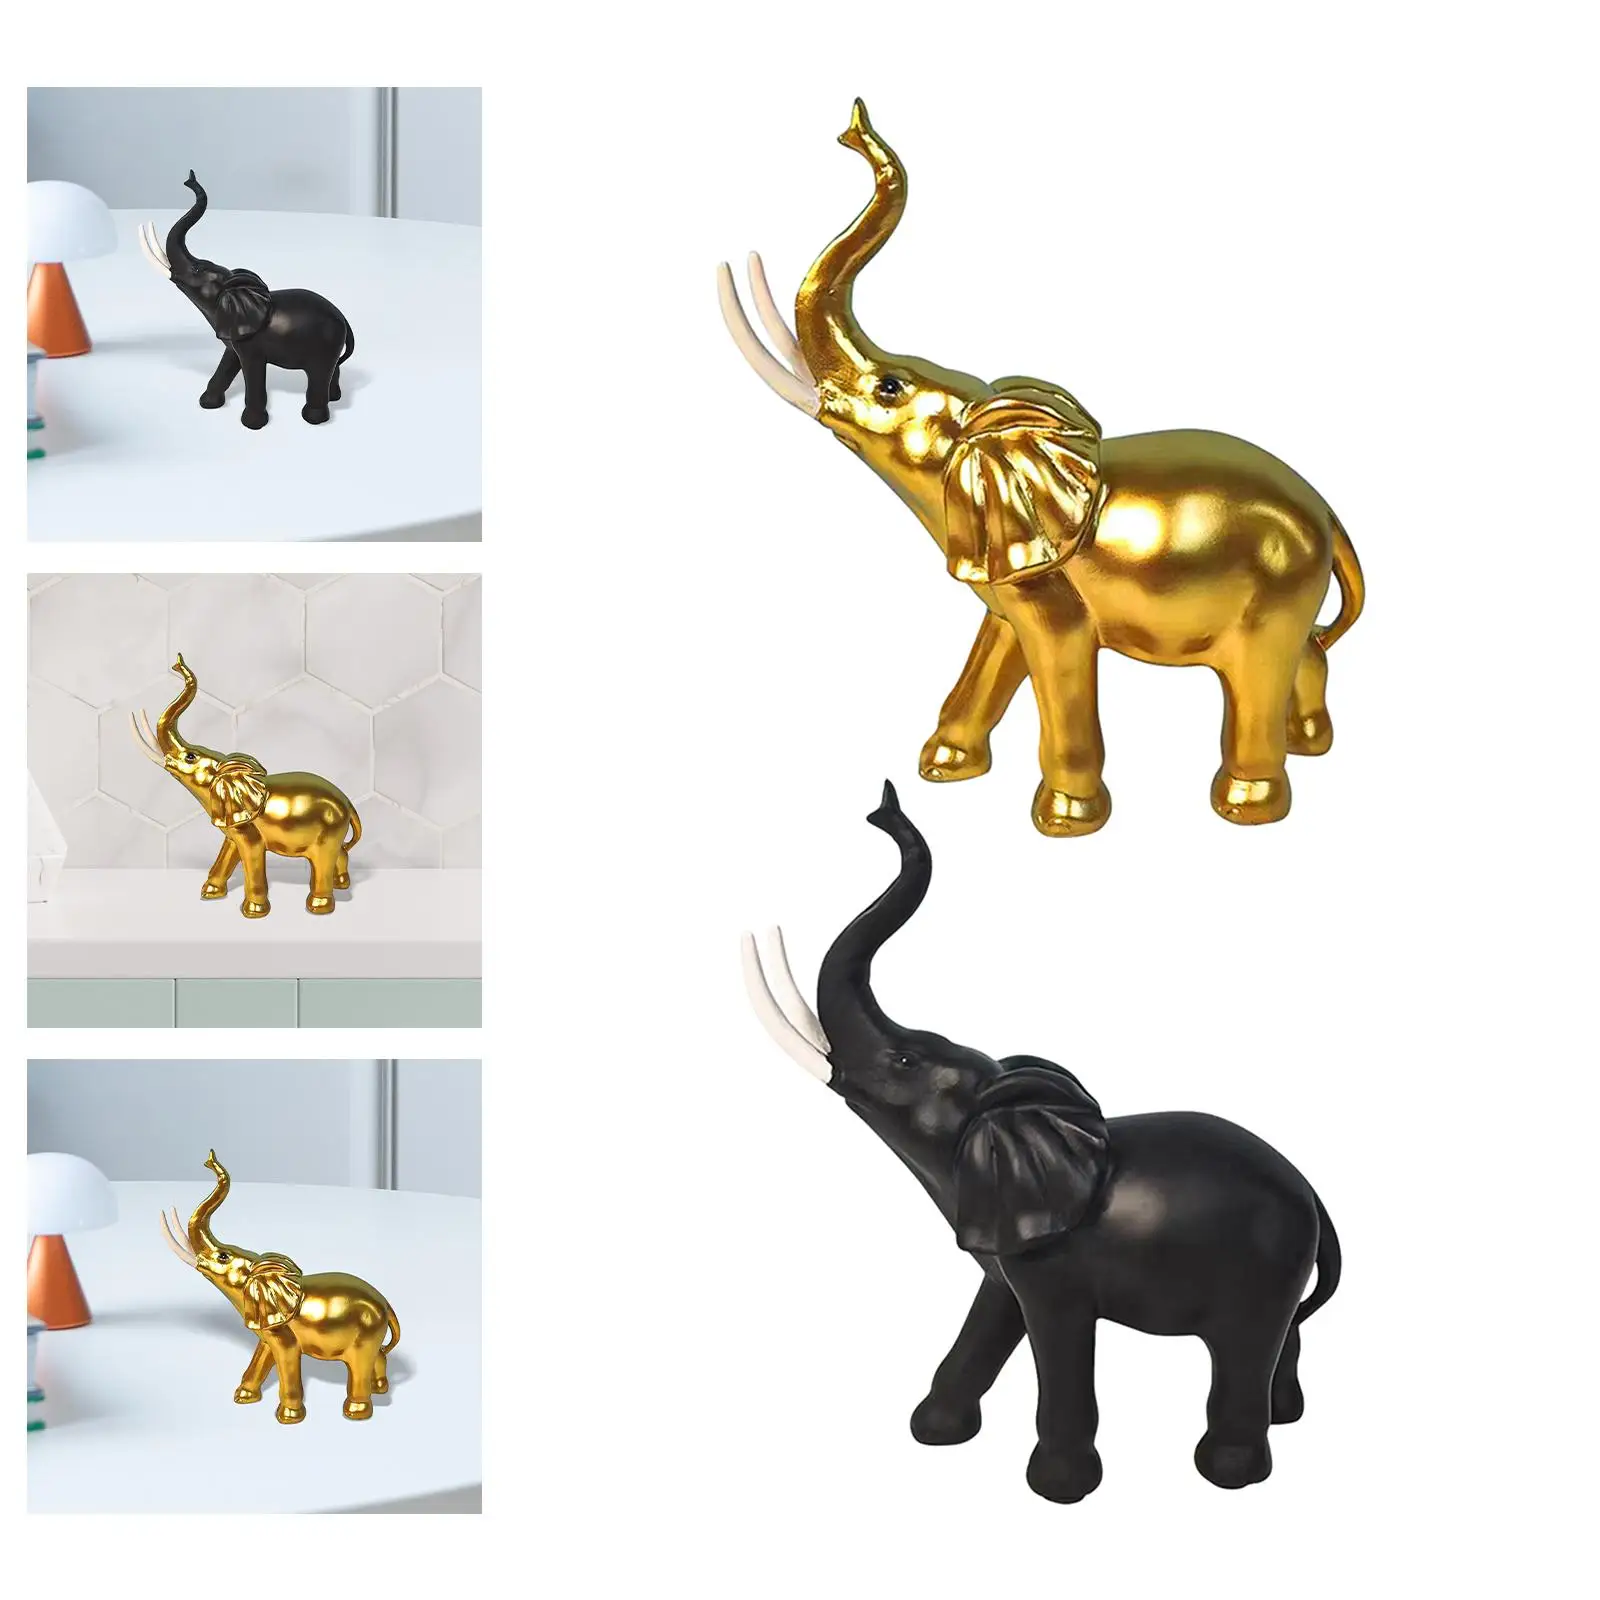 Elephant Statue Home Decor Elephant Sculpture Collection Animal Sculpture for Bedroom Entrance Bookshelf Living Room Exhibition